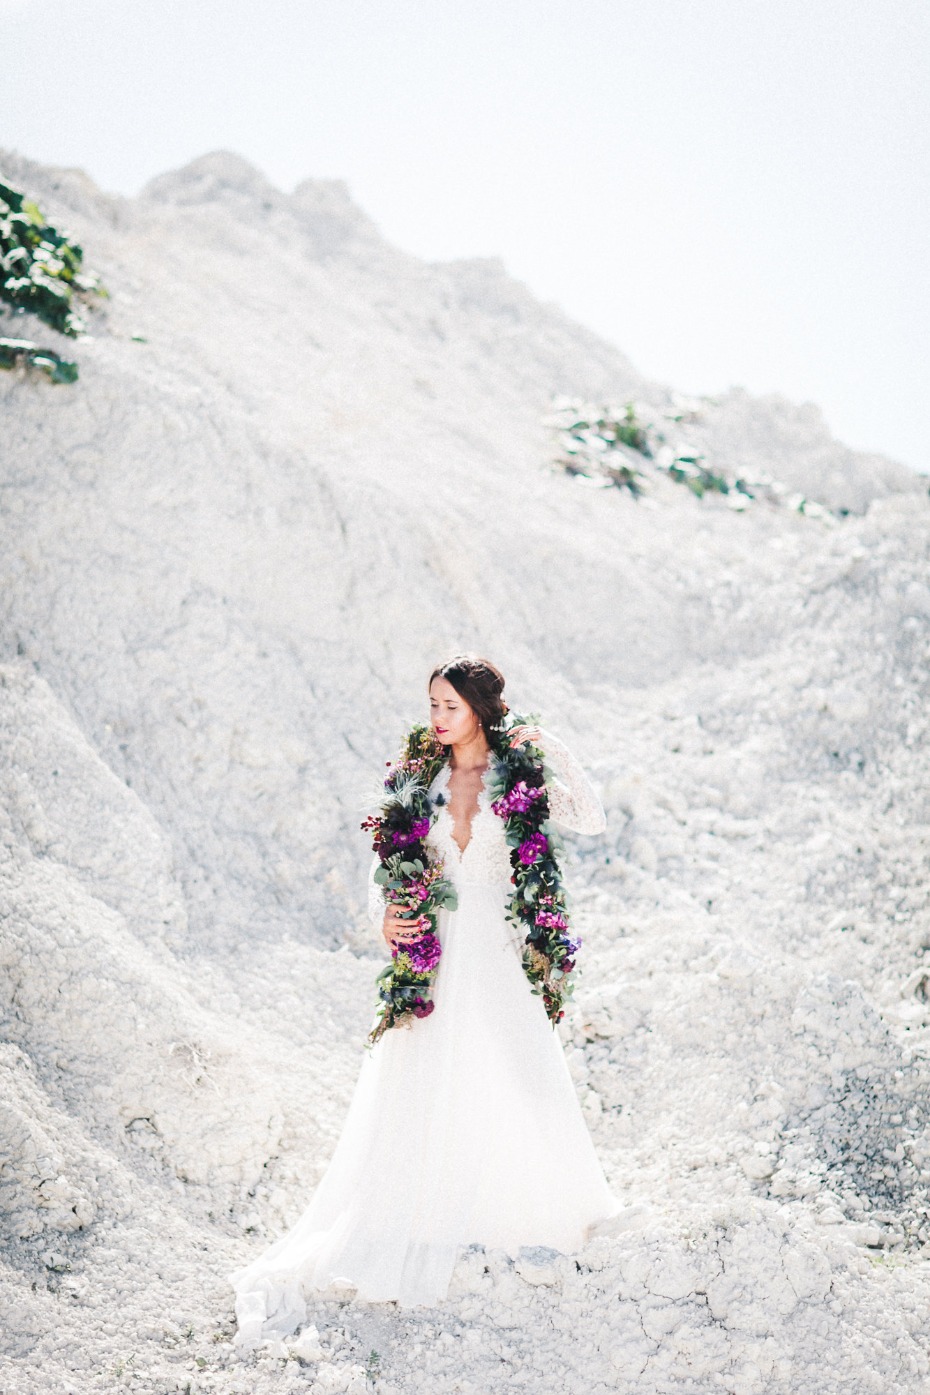 Berry beautiful stone quarry wedding inspiration